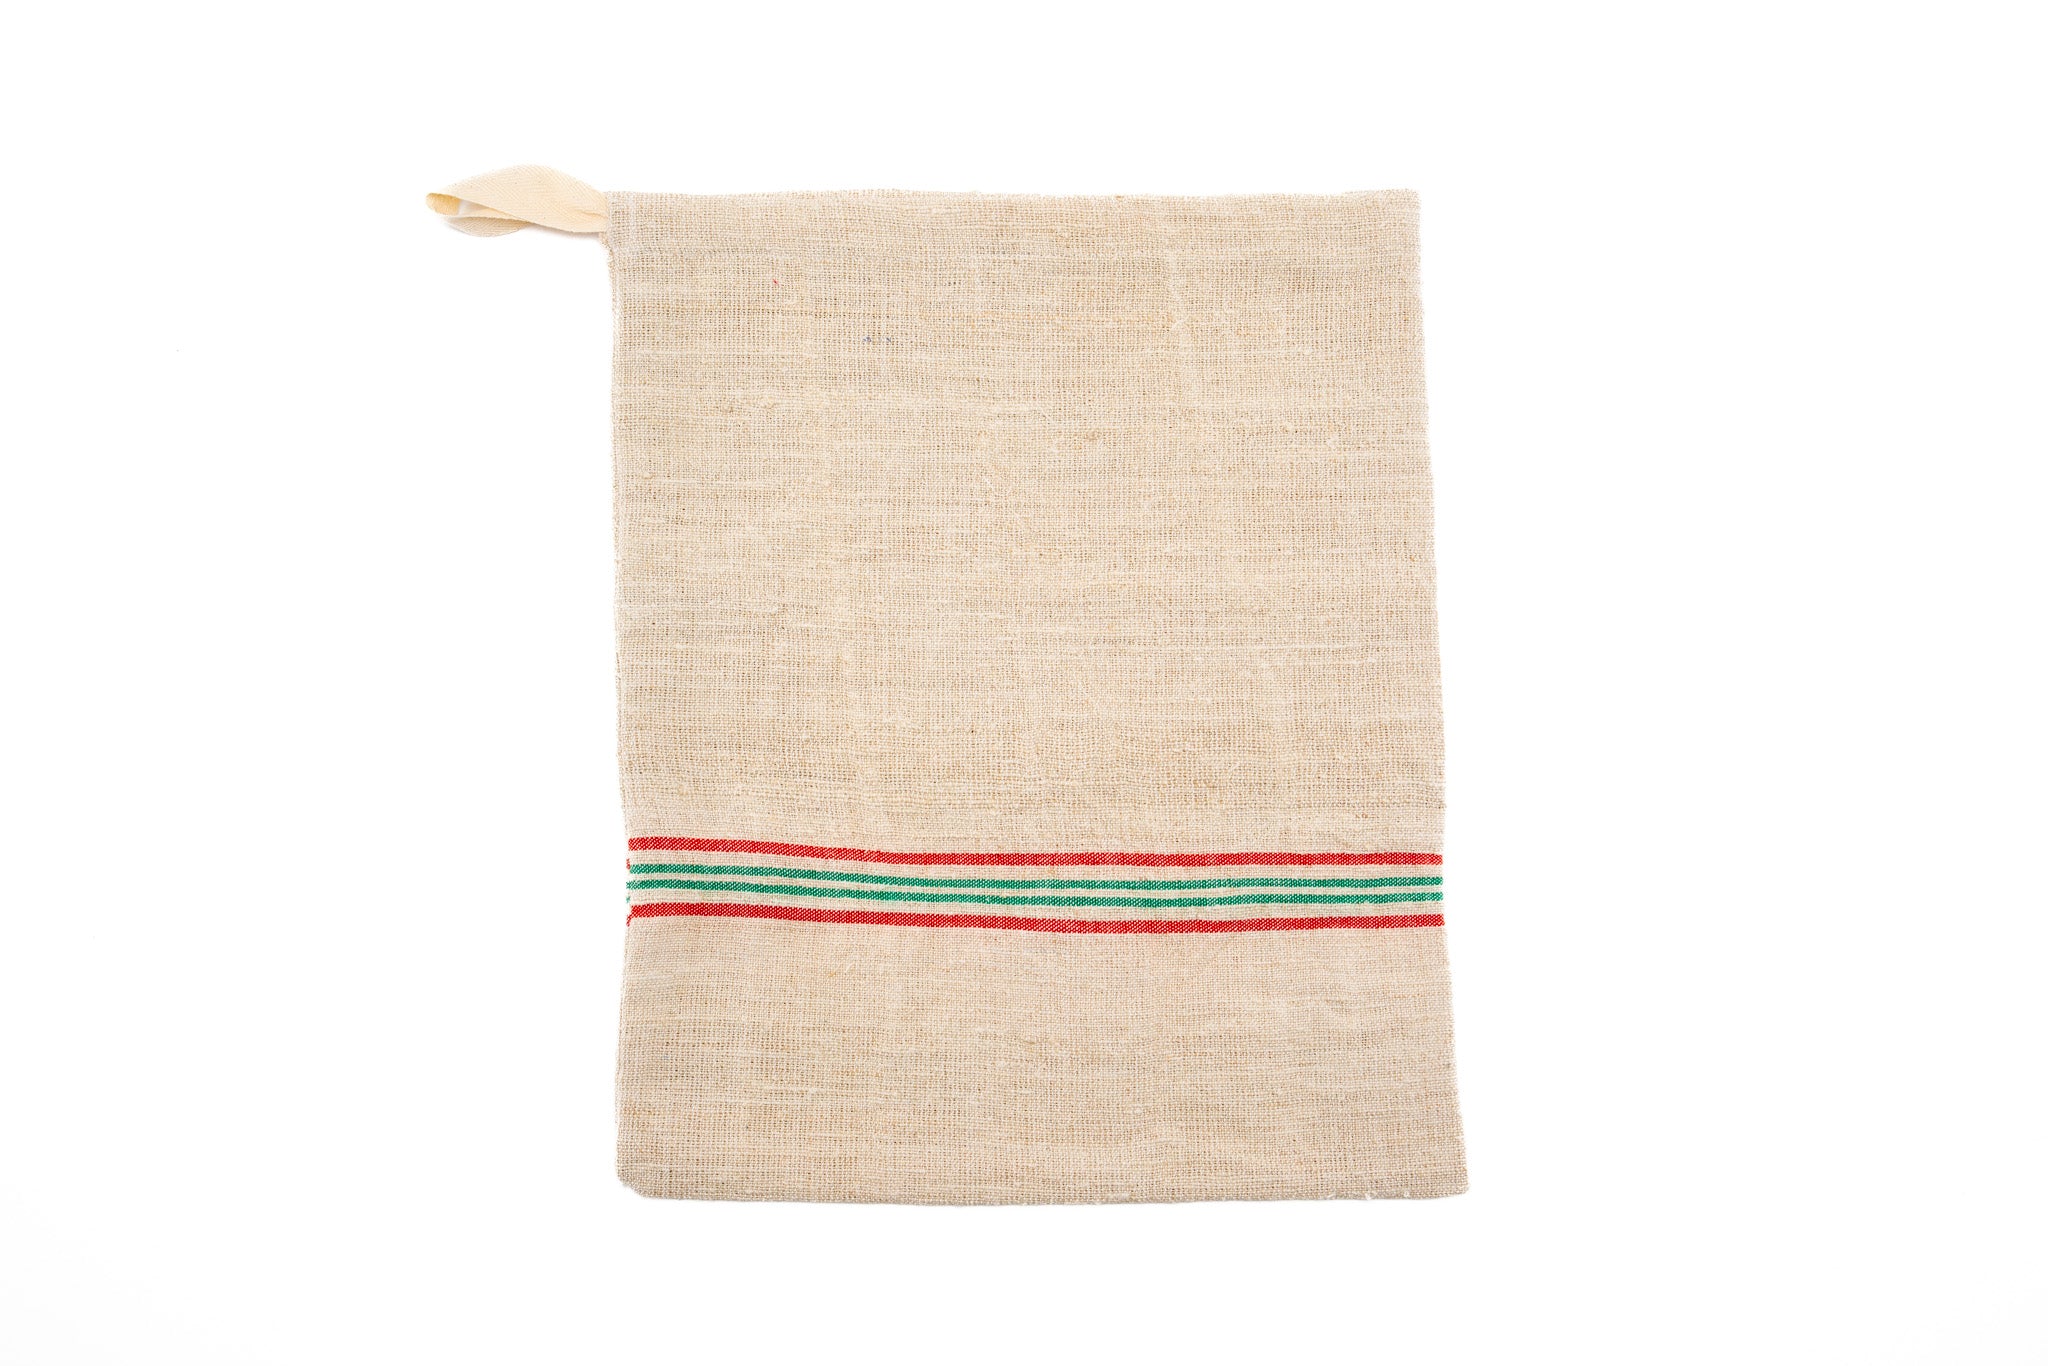 Bag: Handwoven antique and vintage hemp bread bags- BG225